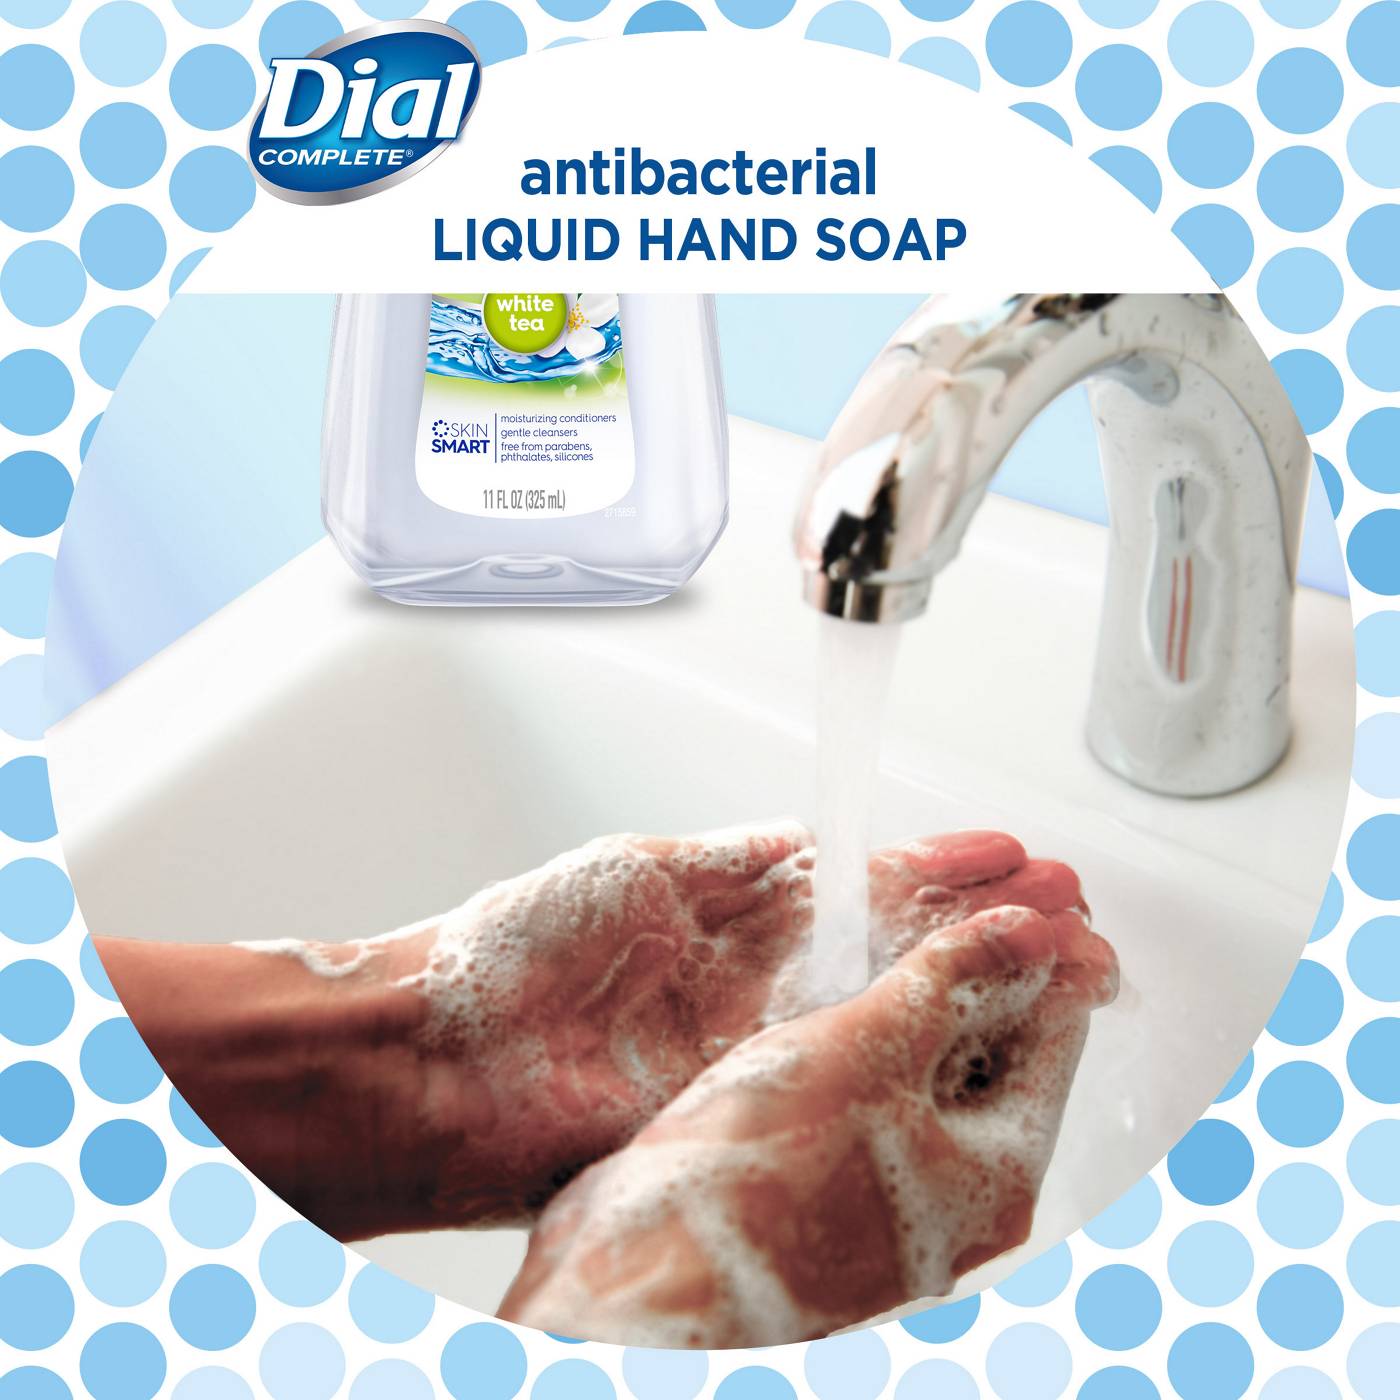 Dial Complete Antibacterial Liquid Hand Soap, White Tea; image 2 of 4